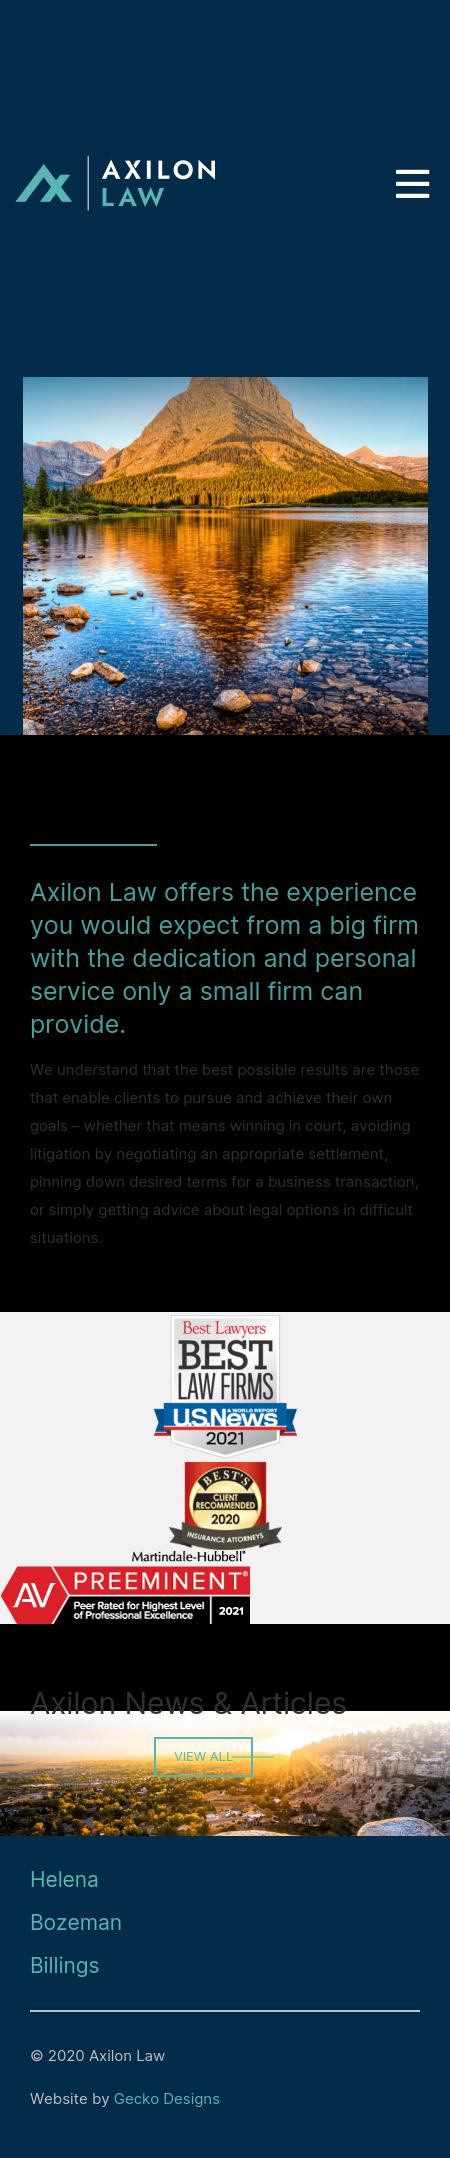 Axilon Law Group - Billings MT Lawyers